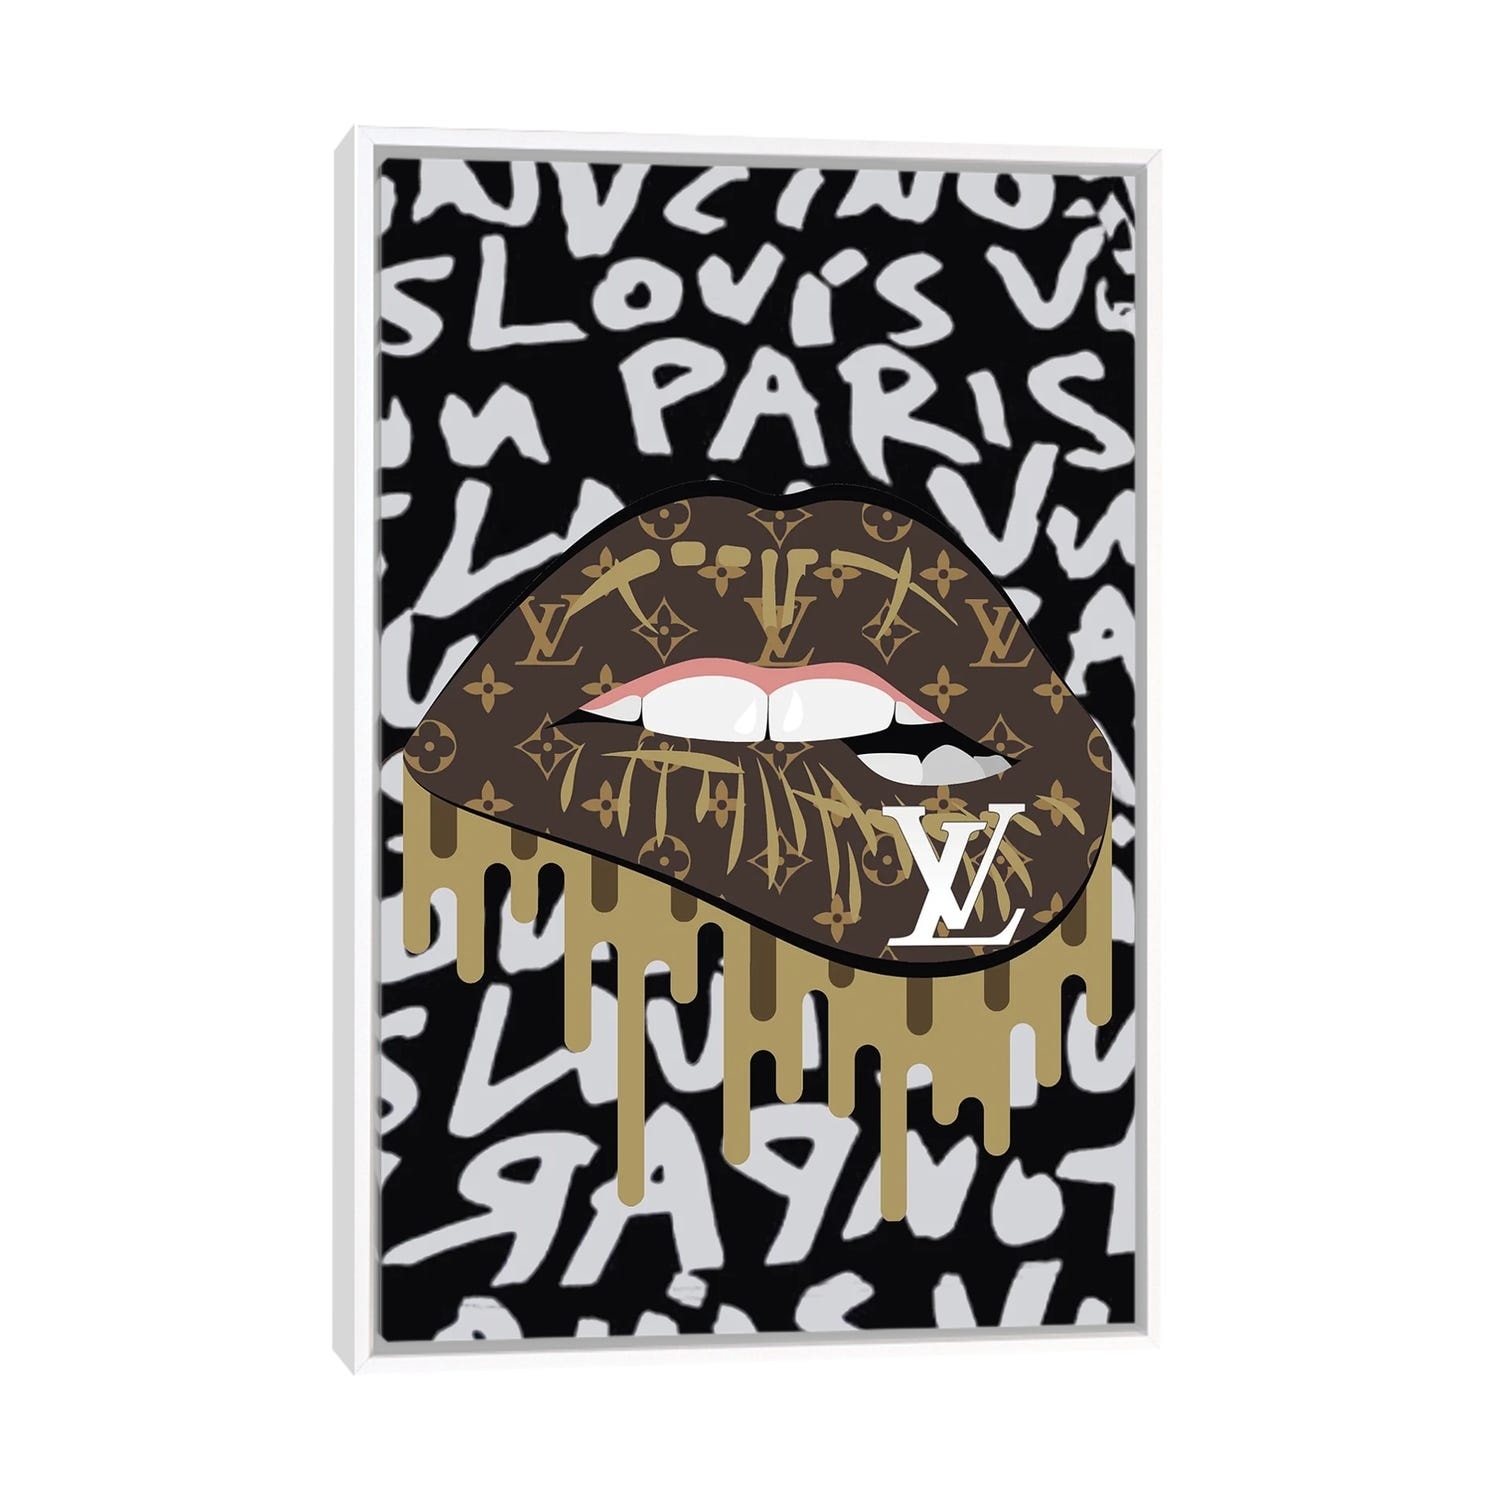 Framed Canvas Art (Gold Floating Frame) - Louis Vuitton Graffiti Lips by Julie Schreiber ( Fashion > Fashion Brands > Louis Vuitton art) - 40x26 in